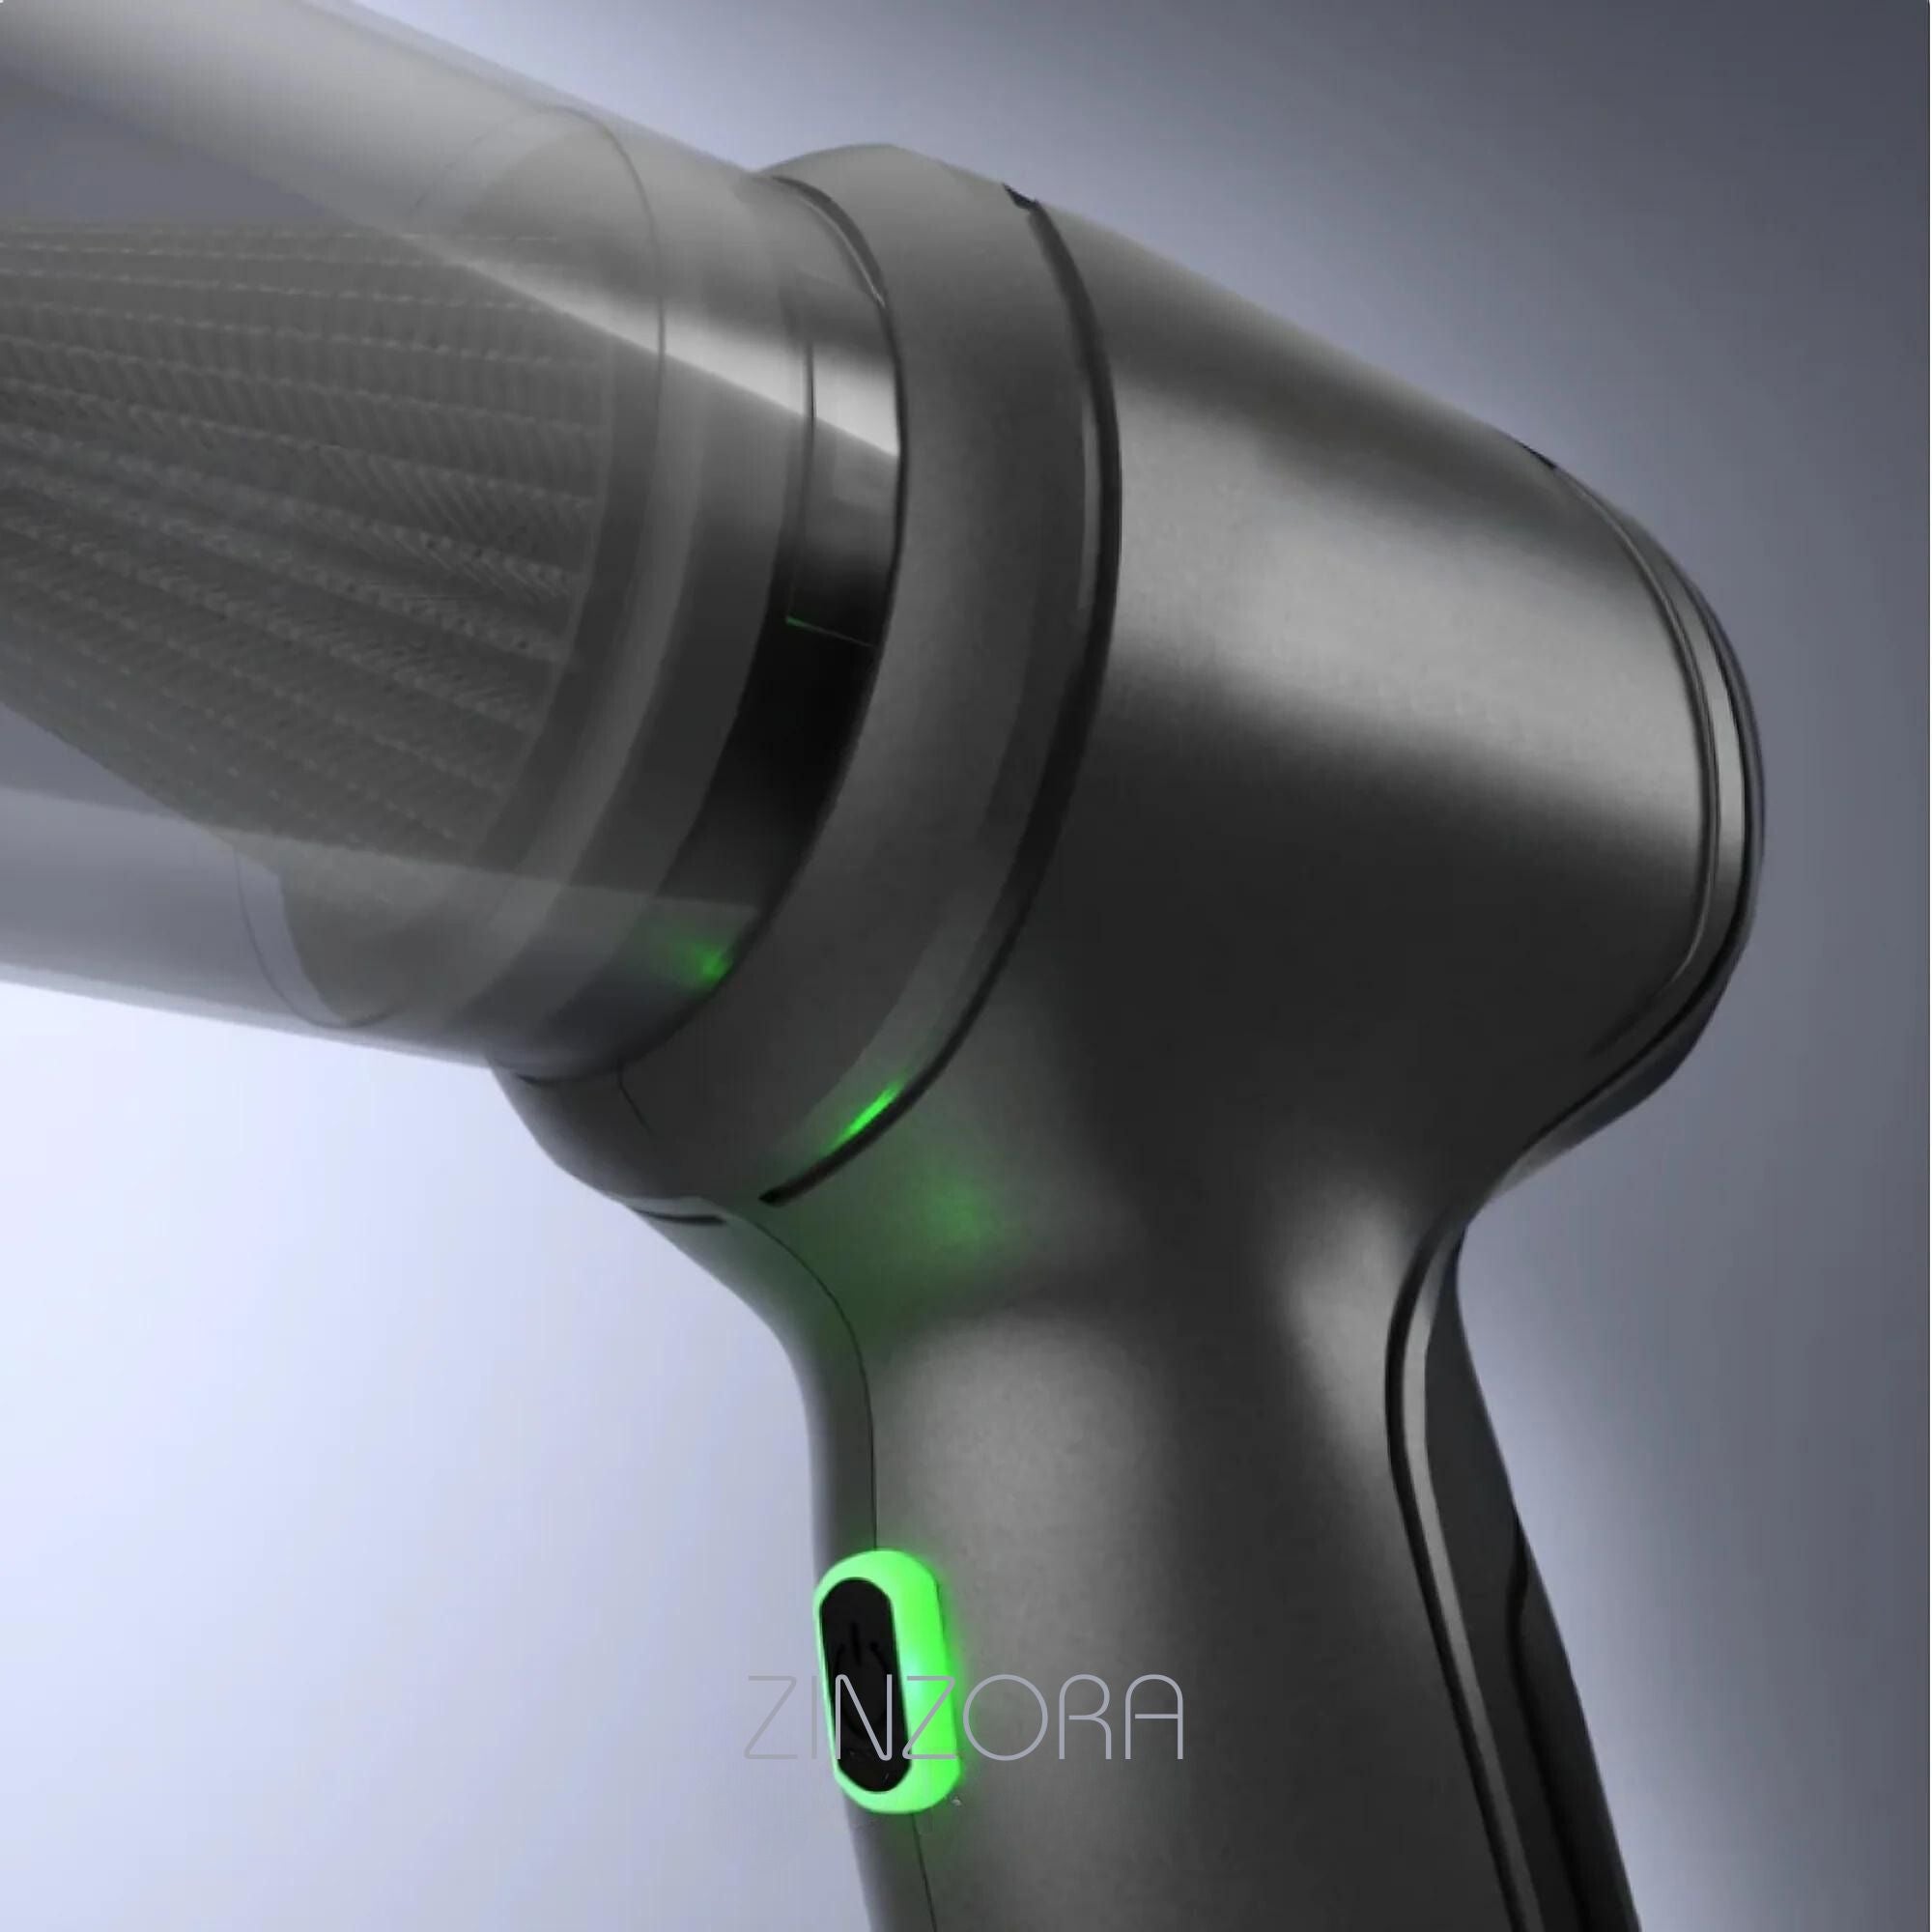 Zinzora Smart Car Vacuum/Air Blower